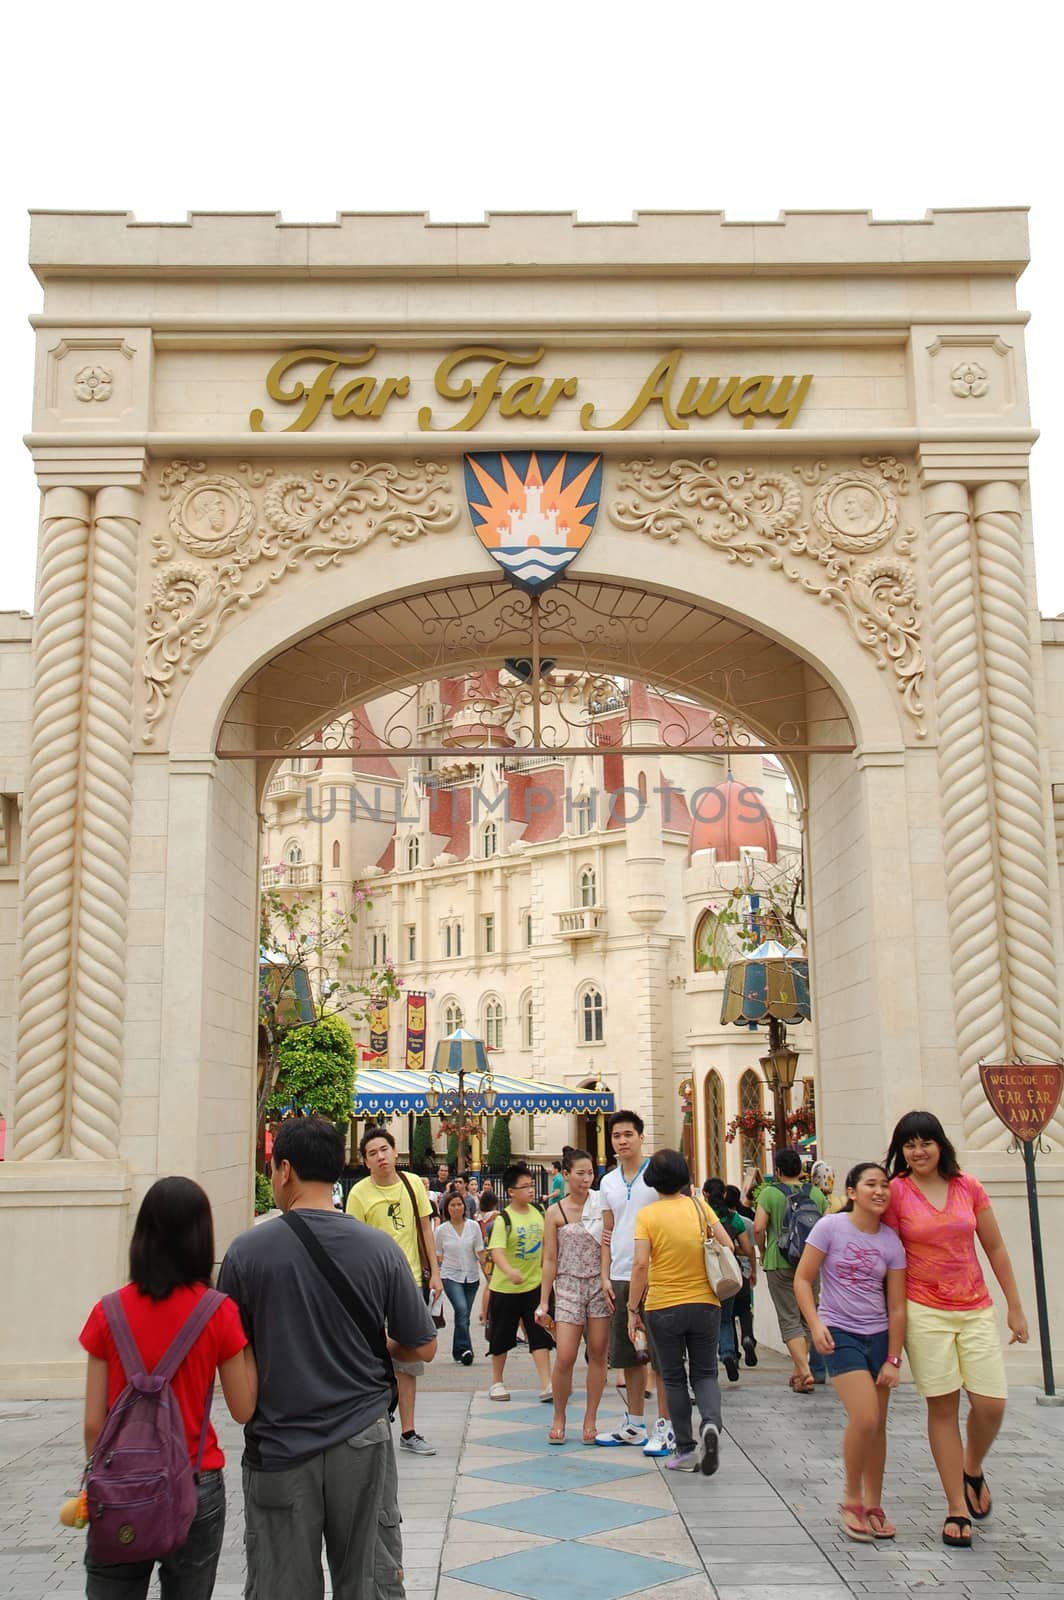 Universal Studios Singapore far far away Shrek theme arch in Sen by imwaltersy